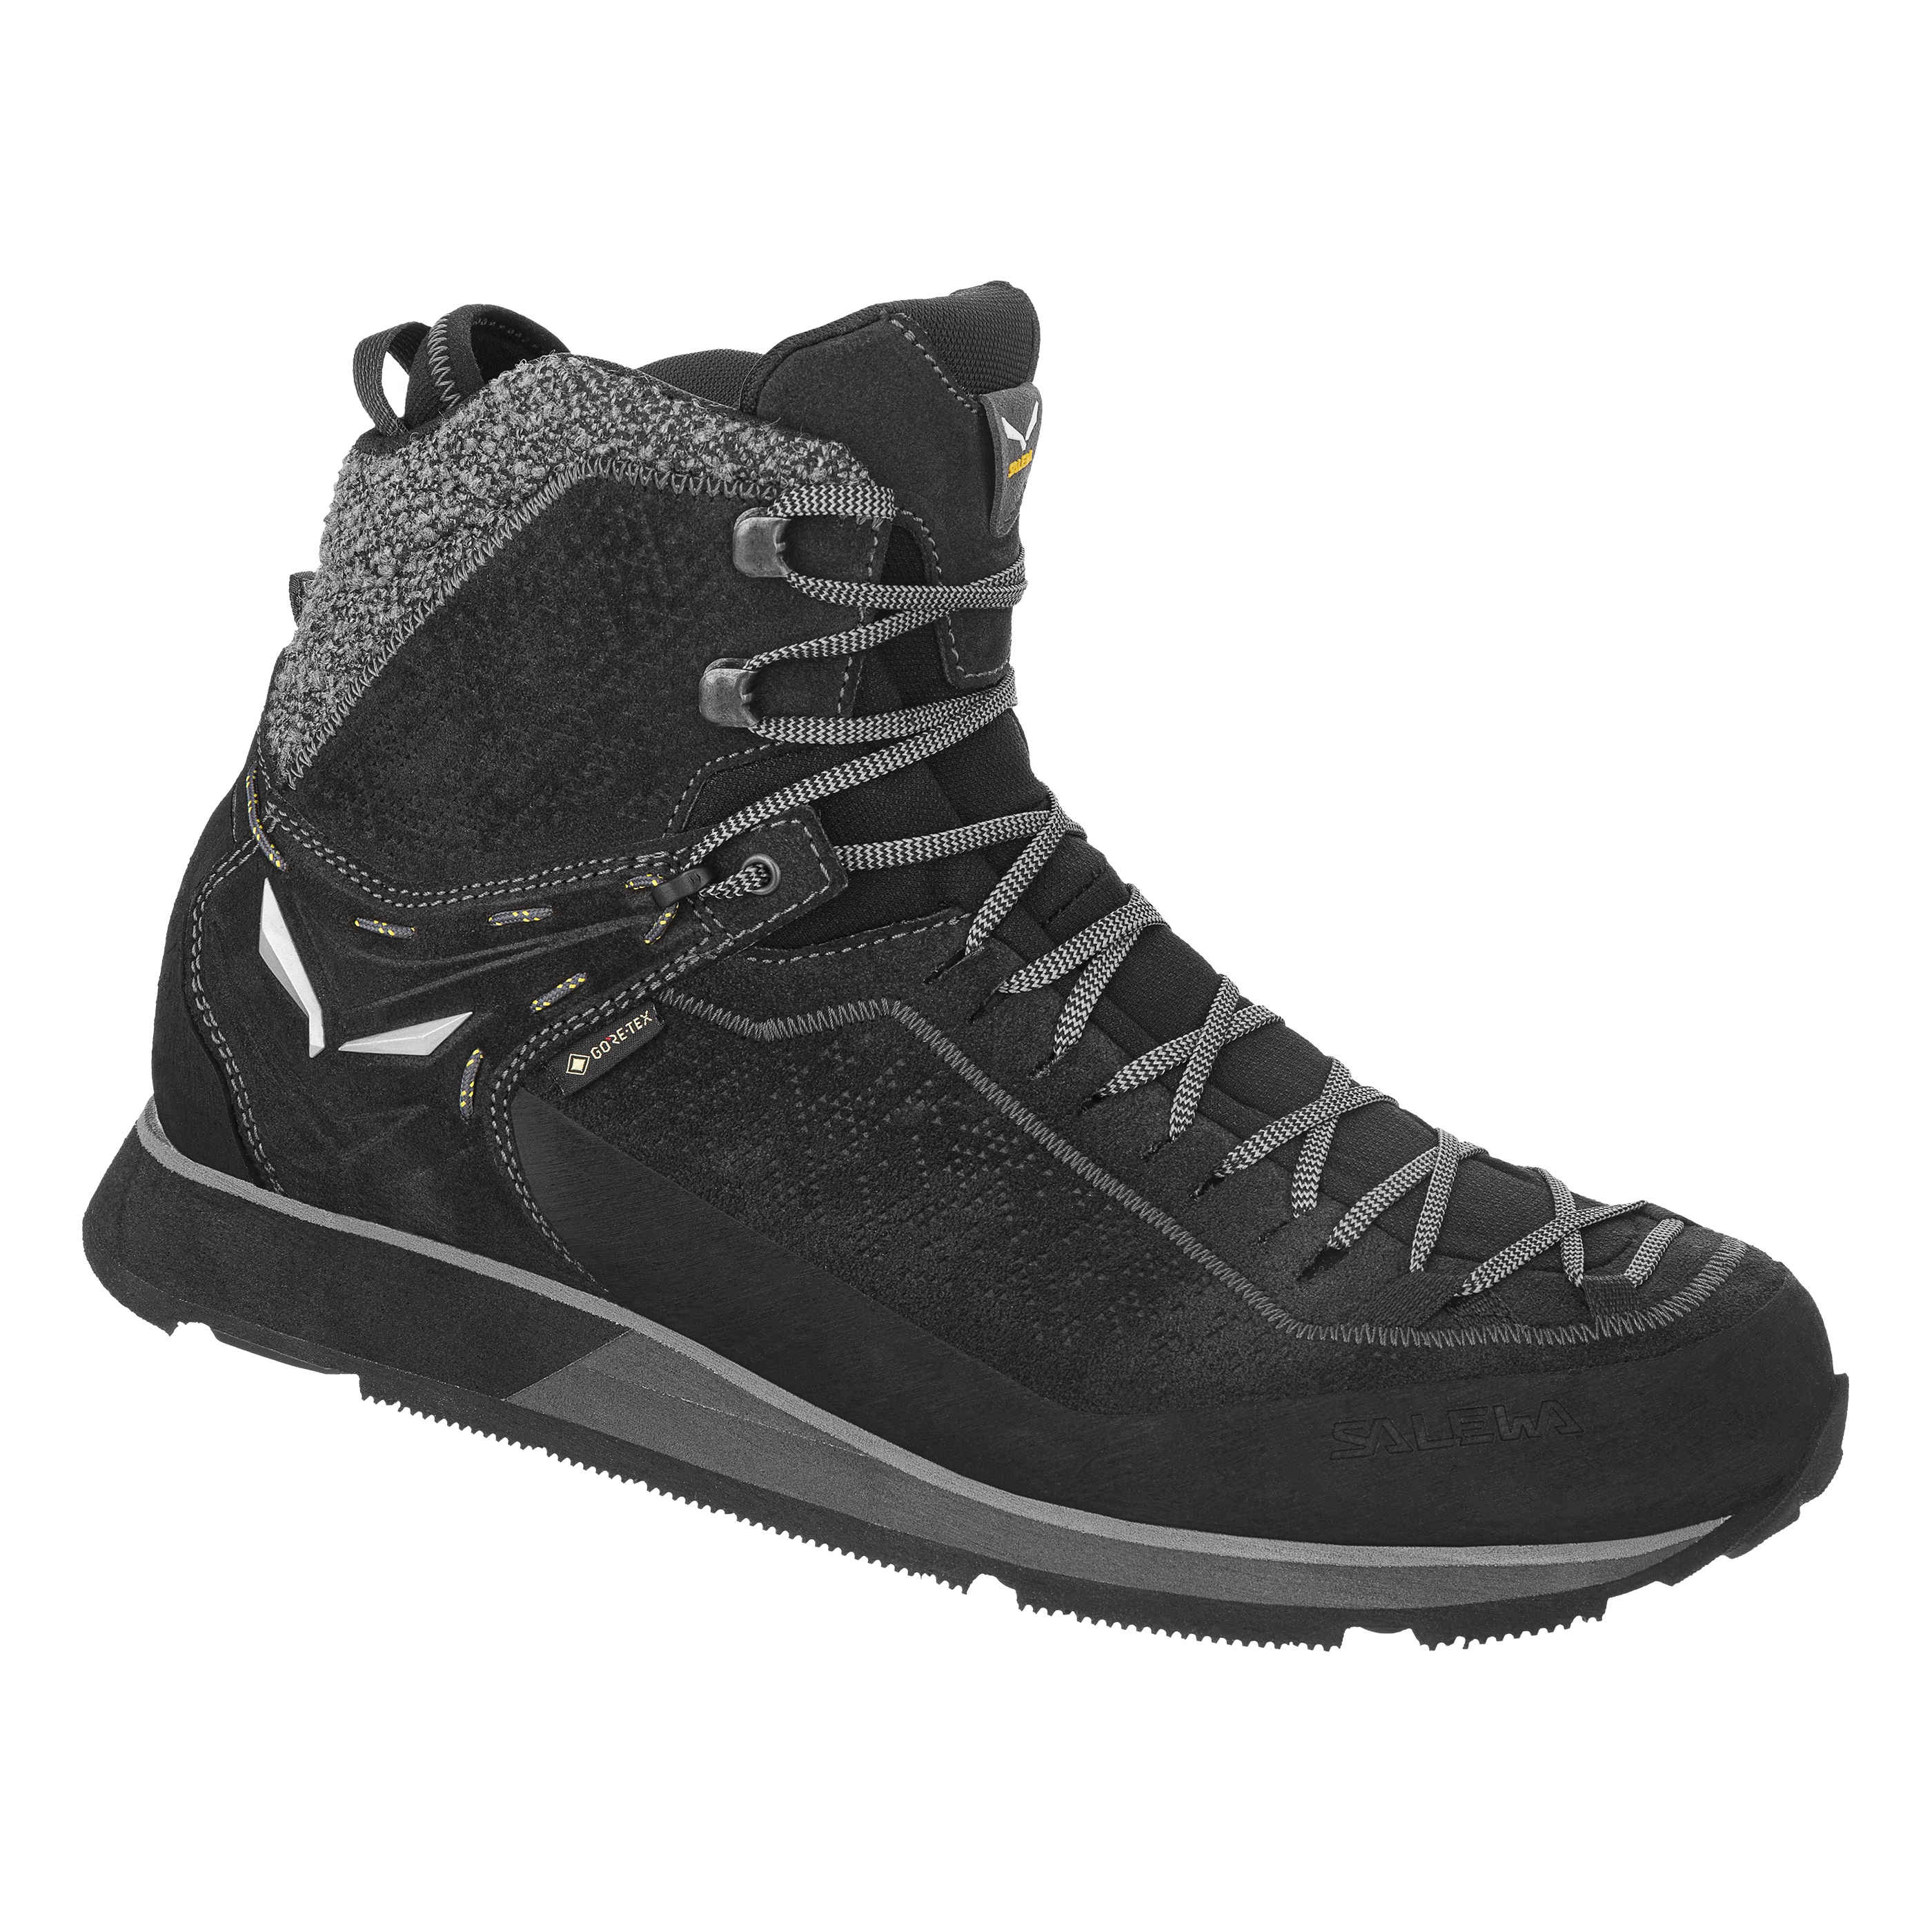 Mountain Trainer 2 Winter GORE-TEX® Men's Shoes